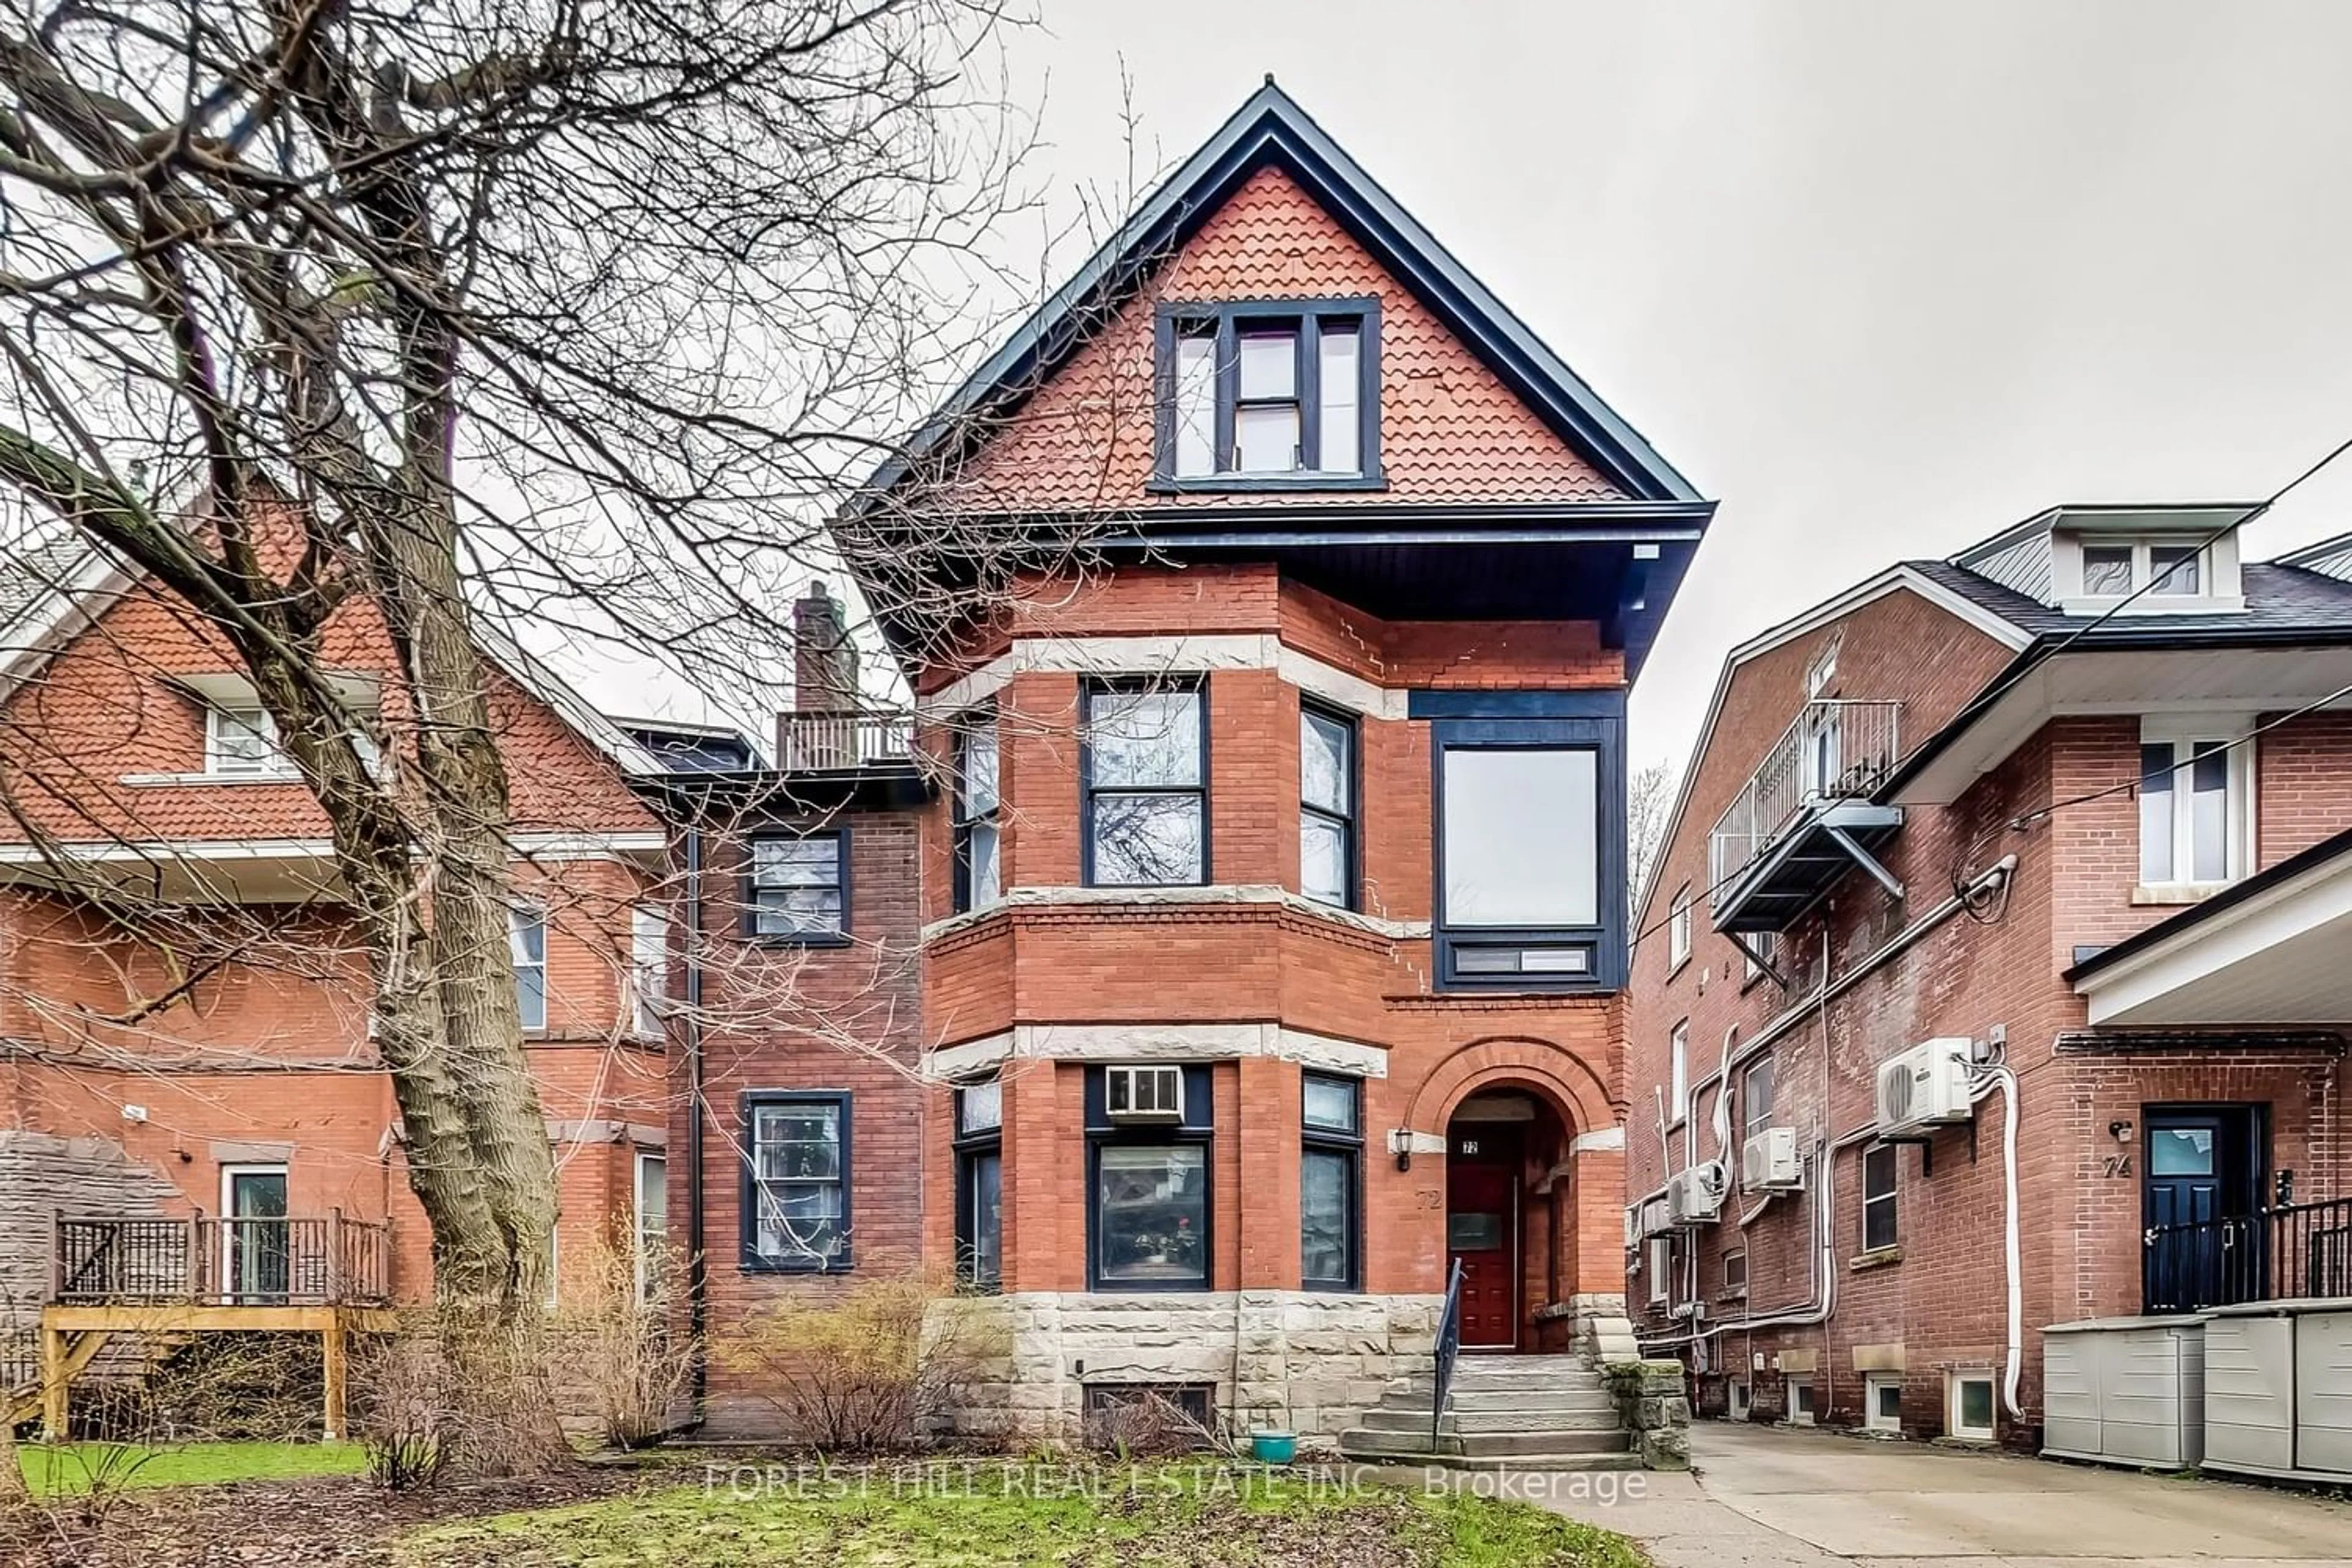 Home with brick exterior material for 72 Walmer Rd, Toronto Ontario M5R 2X7